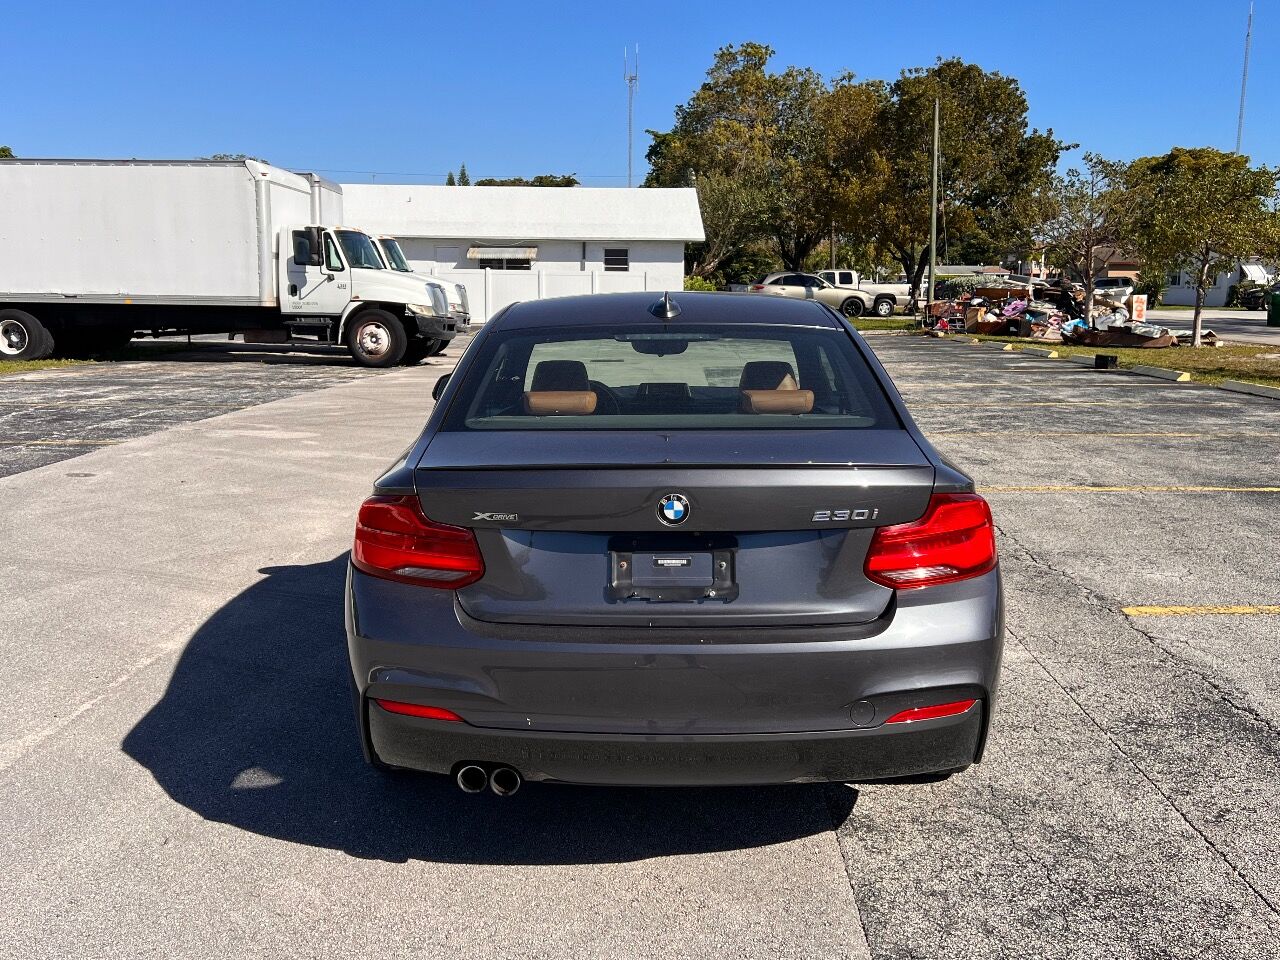 2019 BMW 230i Coupe - $17,500